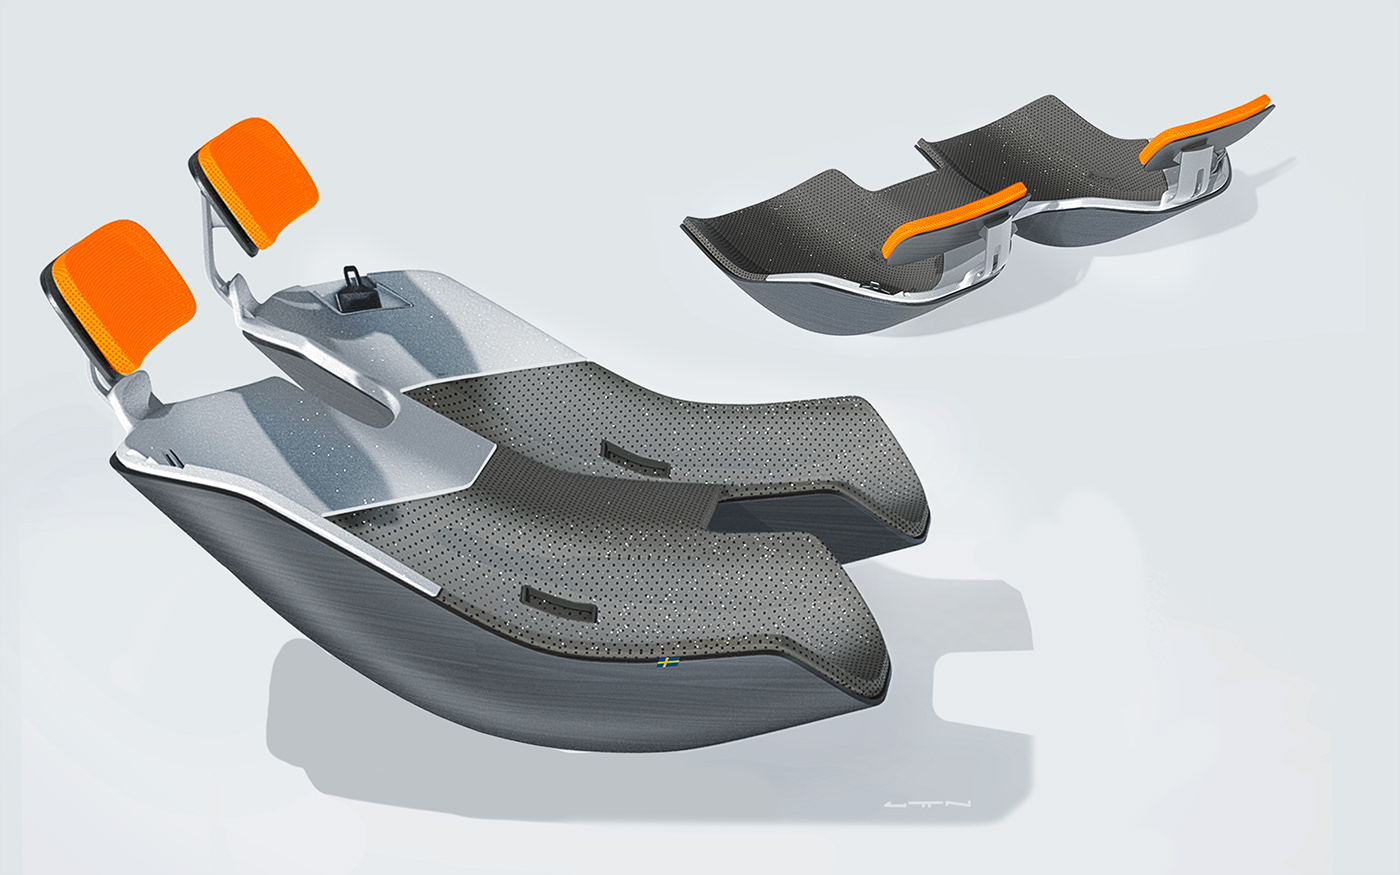 art automotivdesign car cardesign cardesignsketch concept fourniture ILLUSTRATION  industrialdesign saab